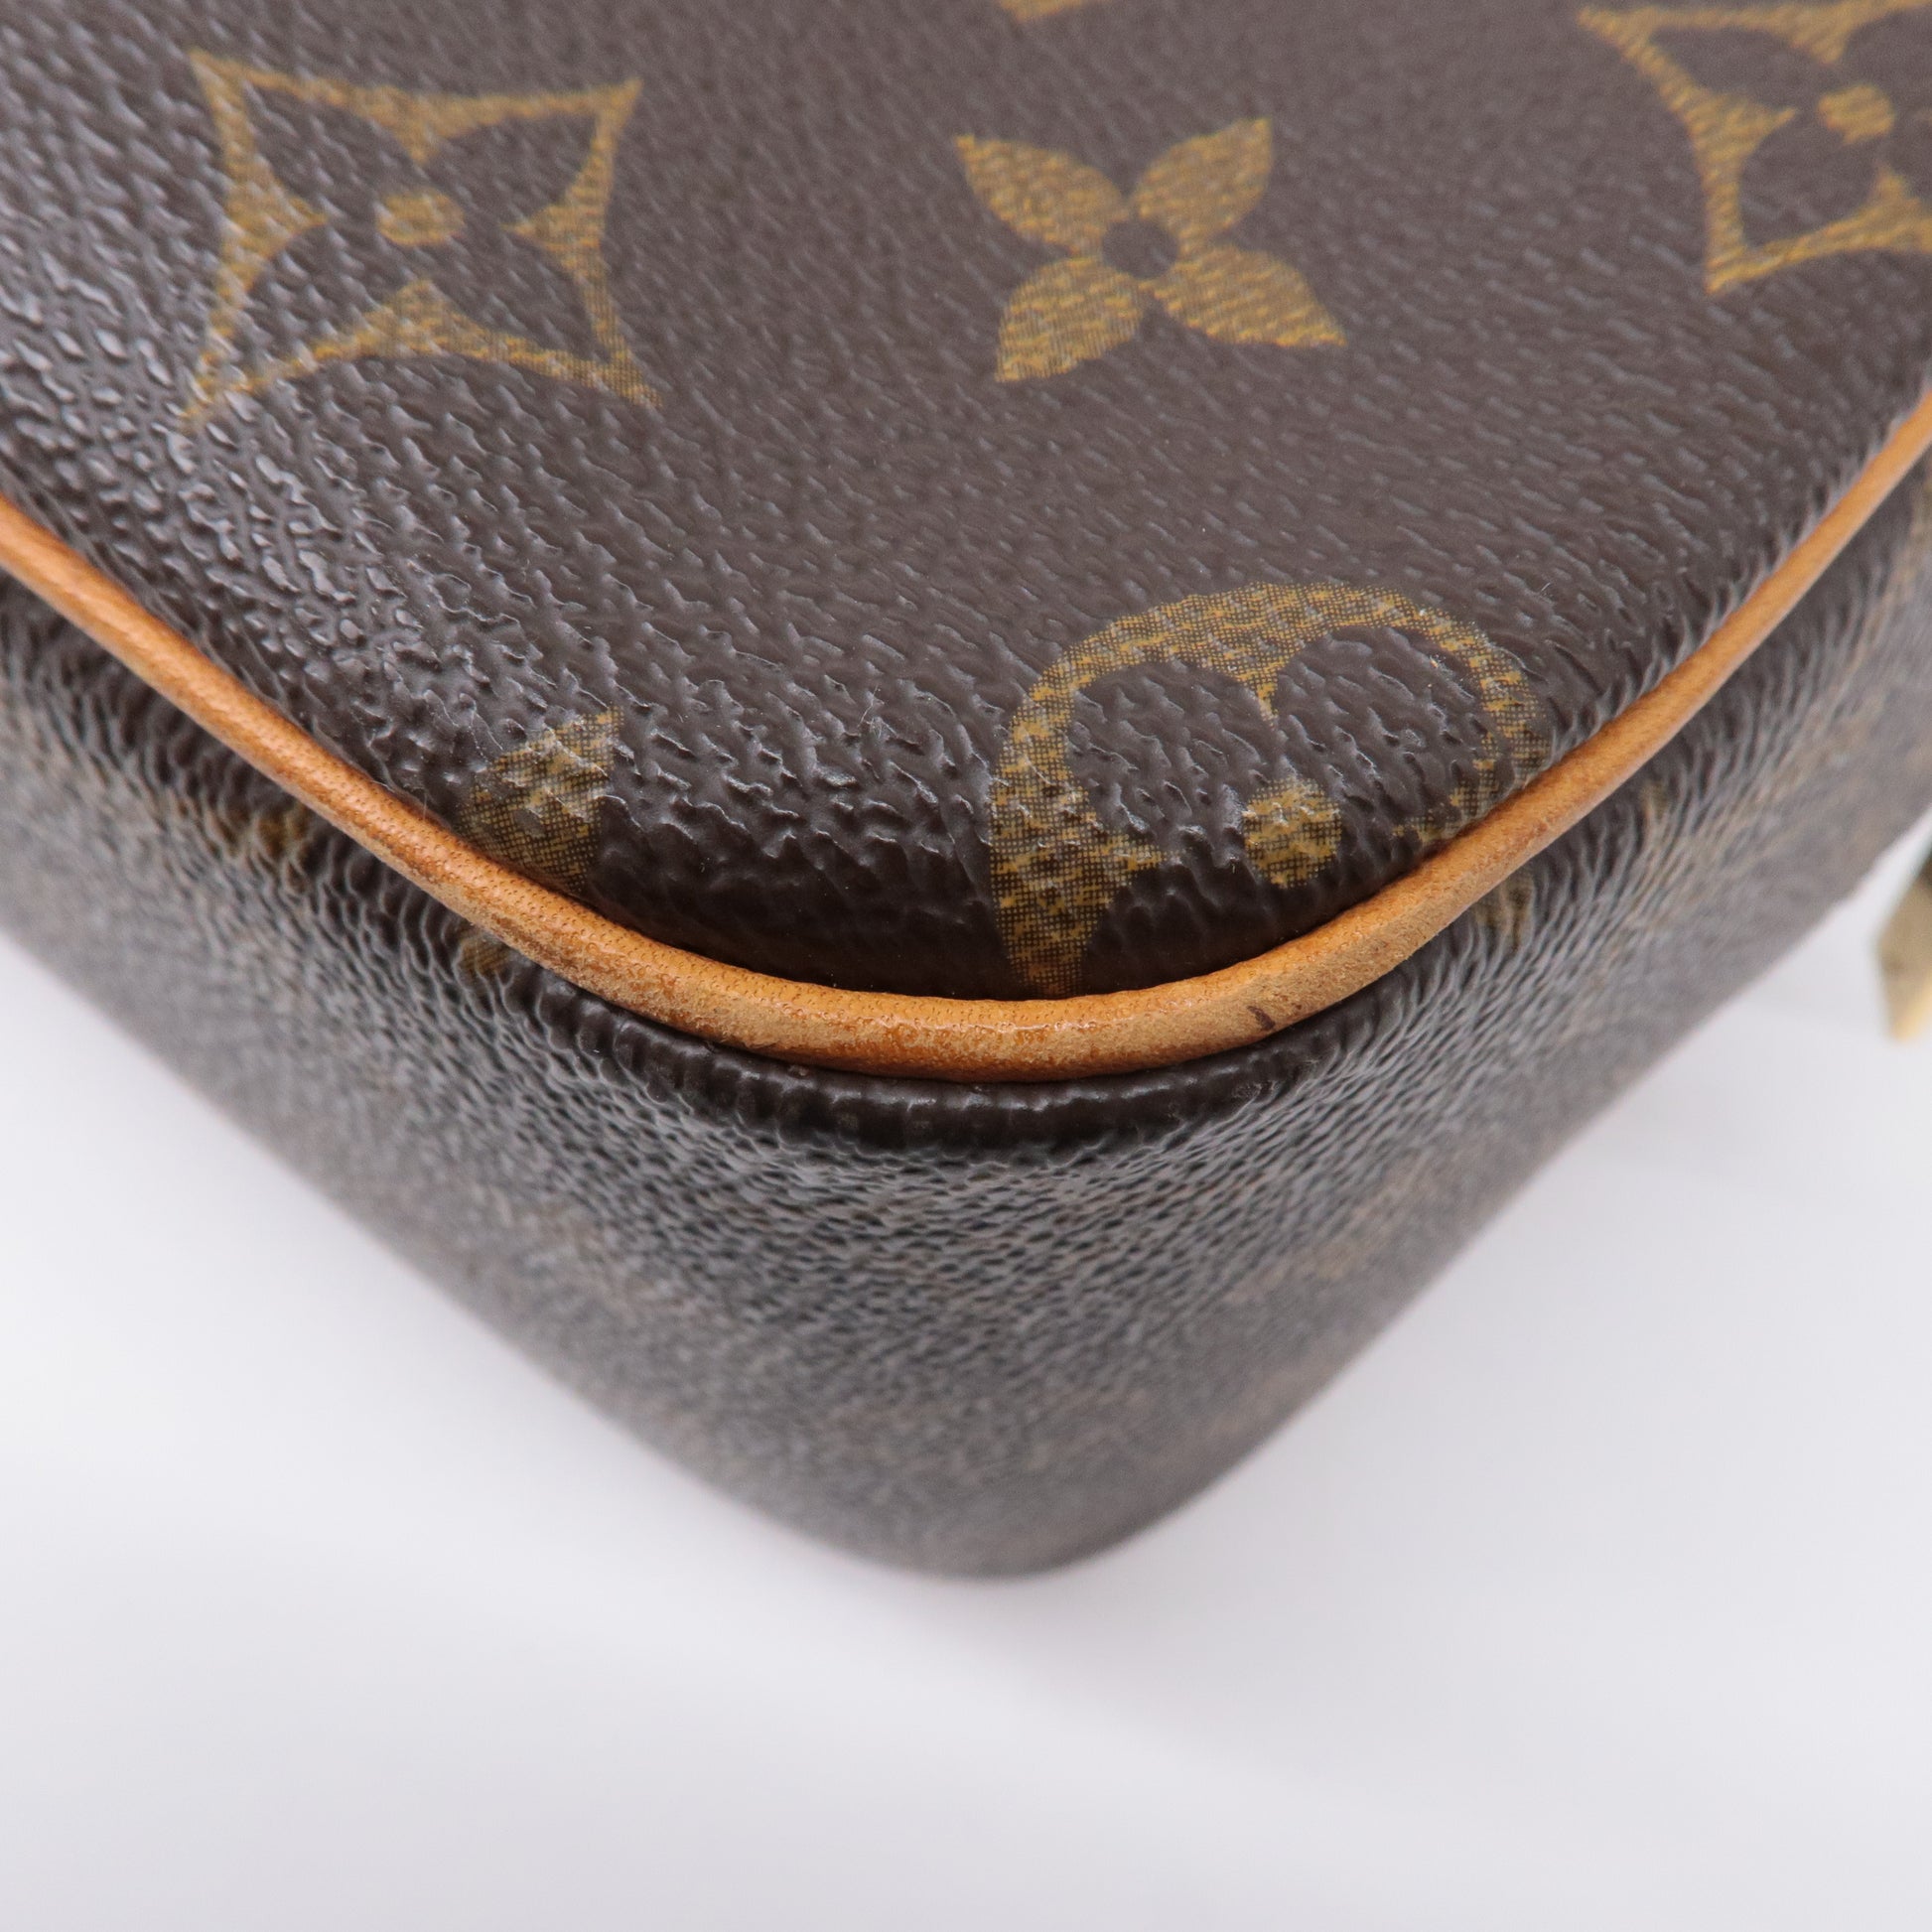 Louis Vuitton Monogram Monogram Small Shoulder Bag